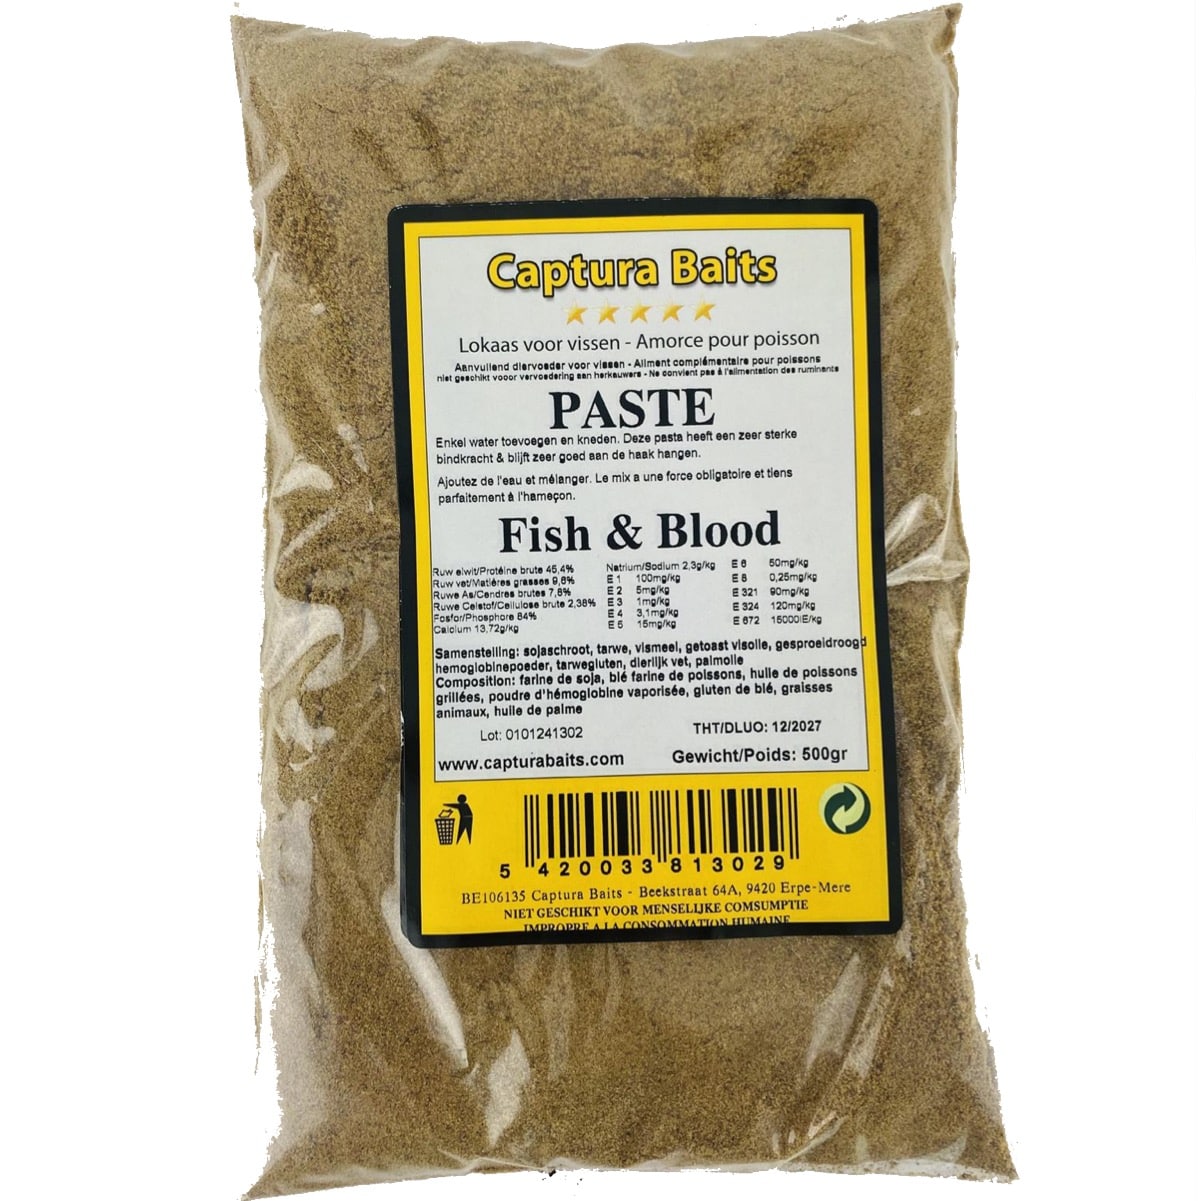 Captura Baits Paste Fish & Blood 500g